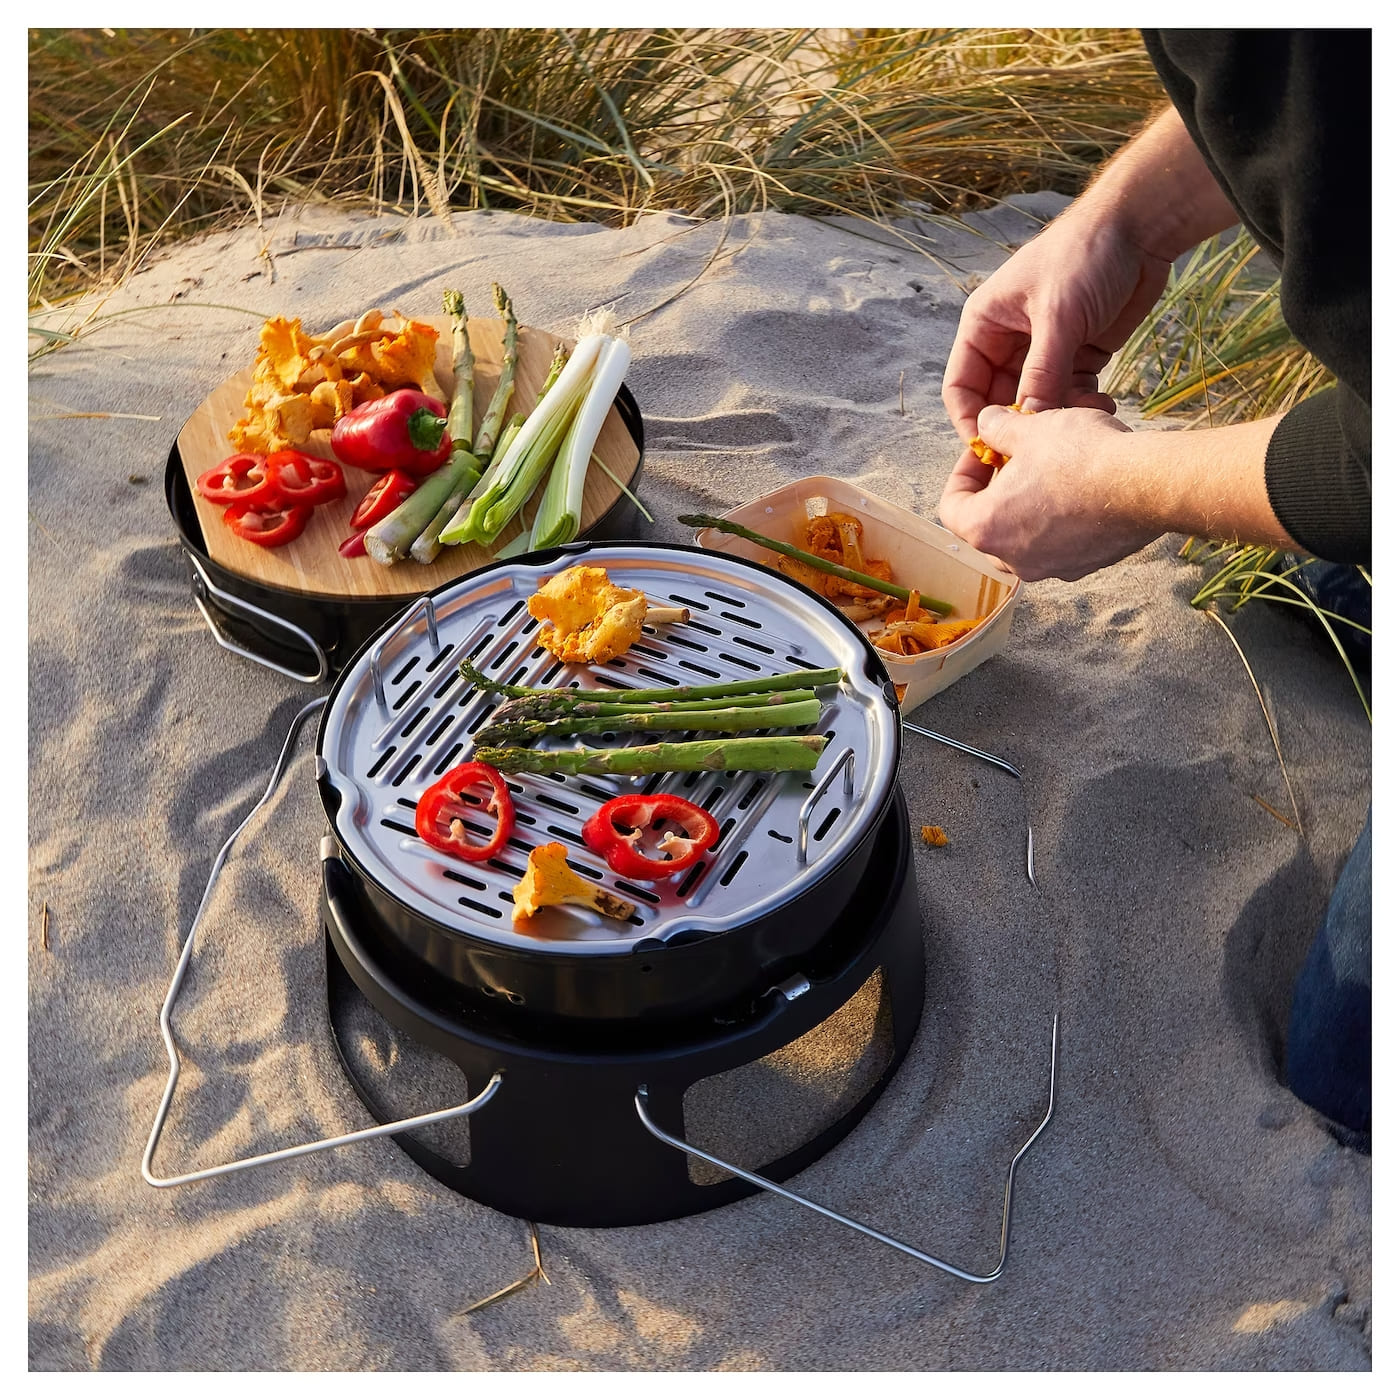 Ikea KASEBERGA Charcoal Barbecue Limited Edition